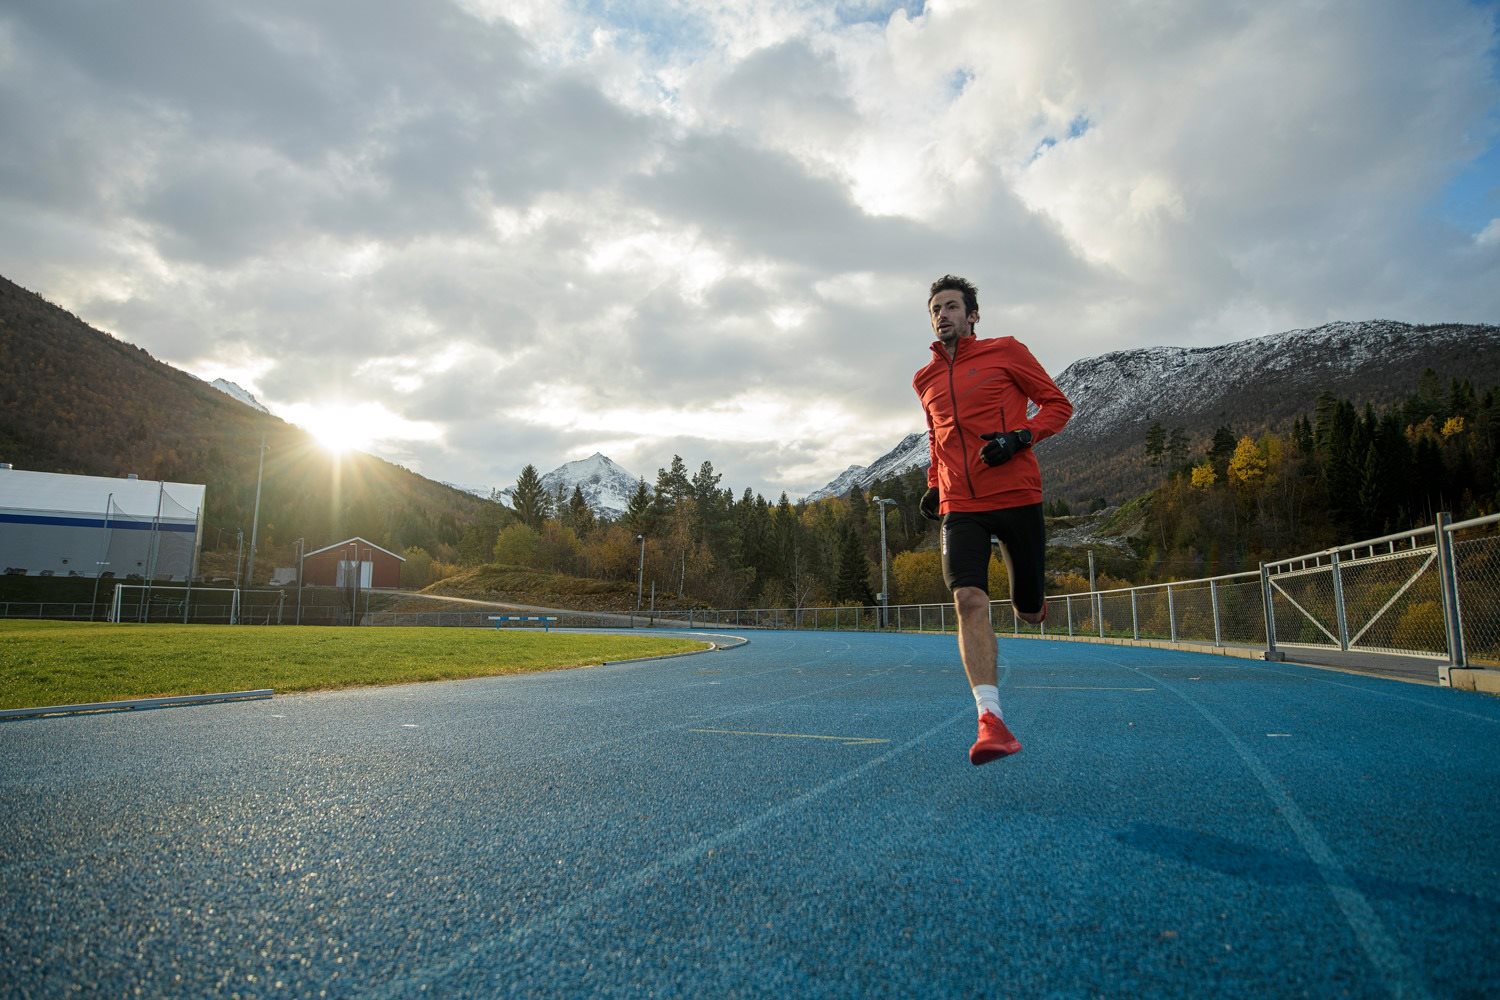 Kilian Jornet intenta batir el récord de correr 24 horas “en pista”